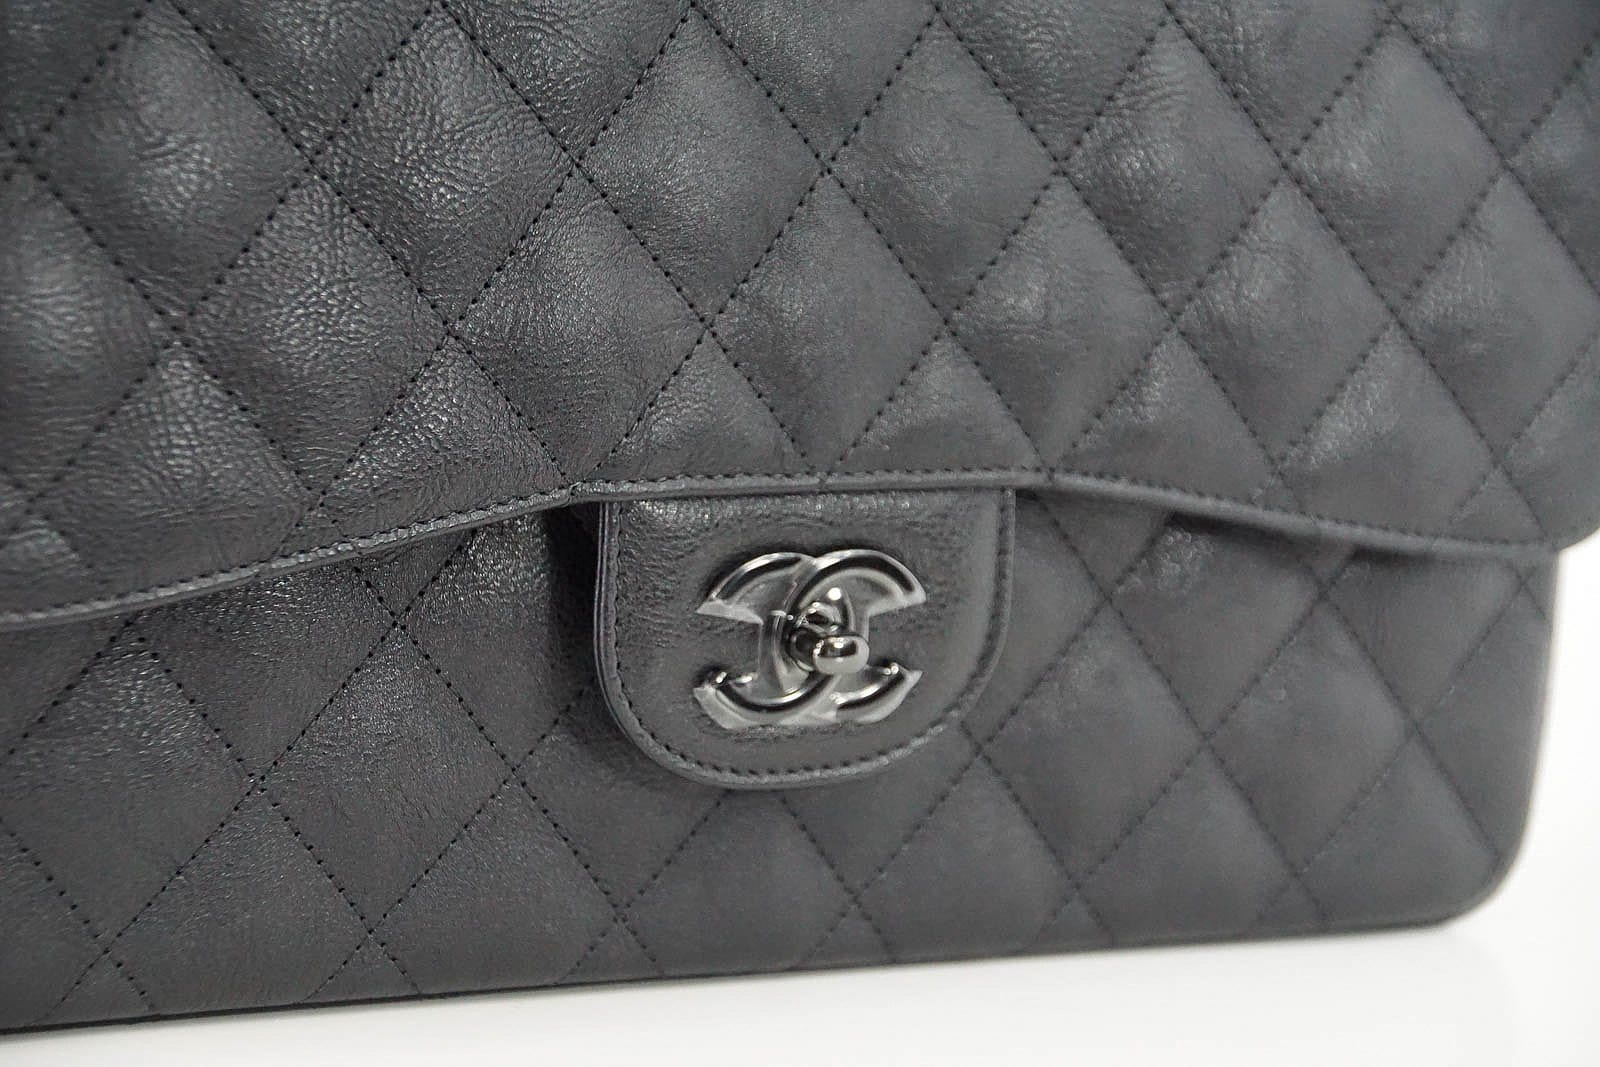 chanel patent leather bag black